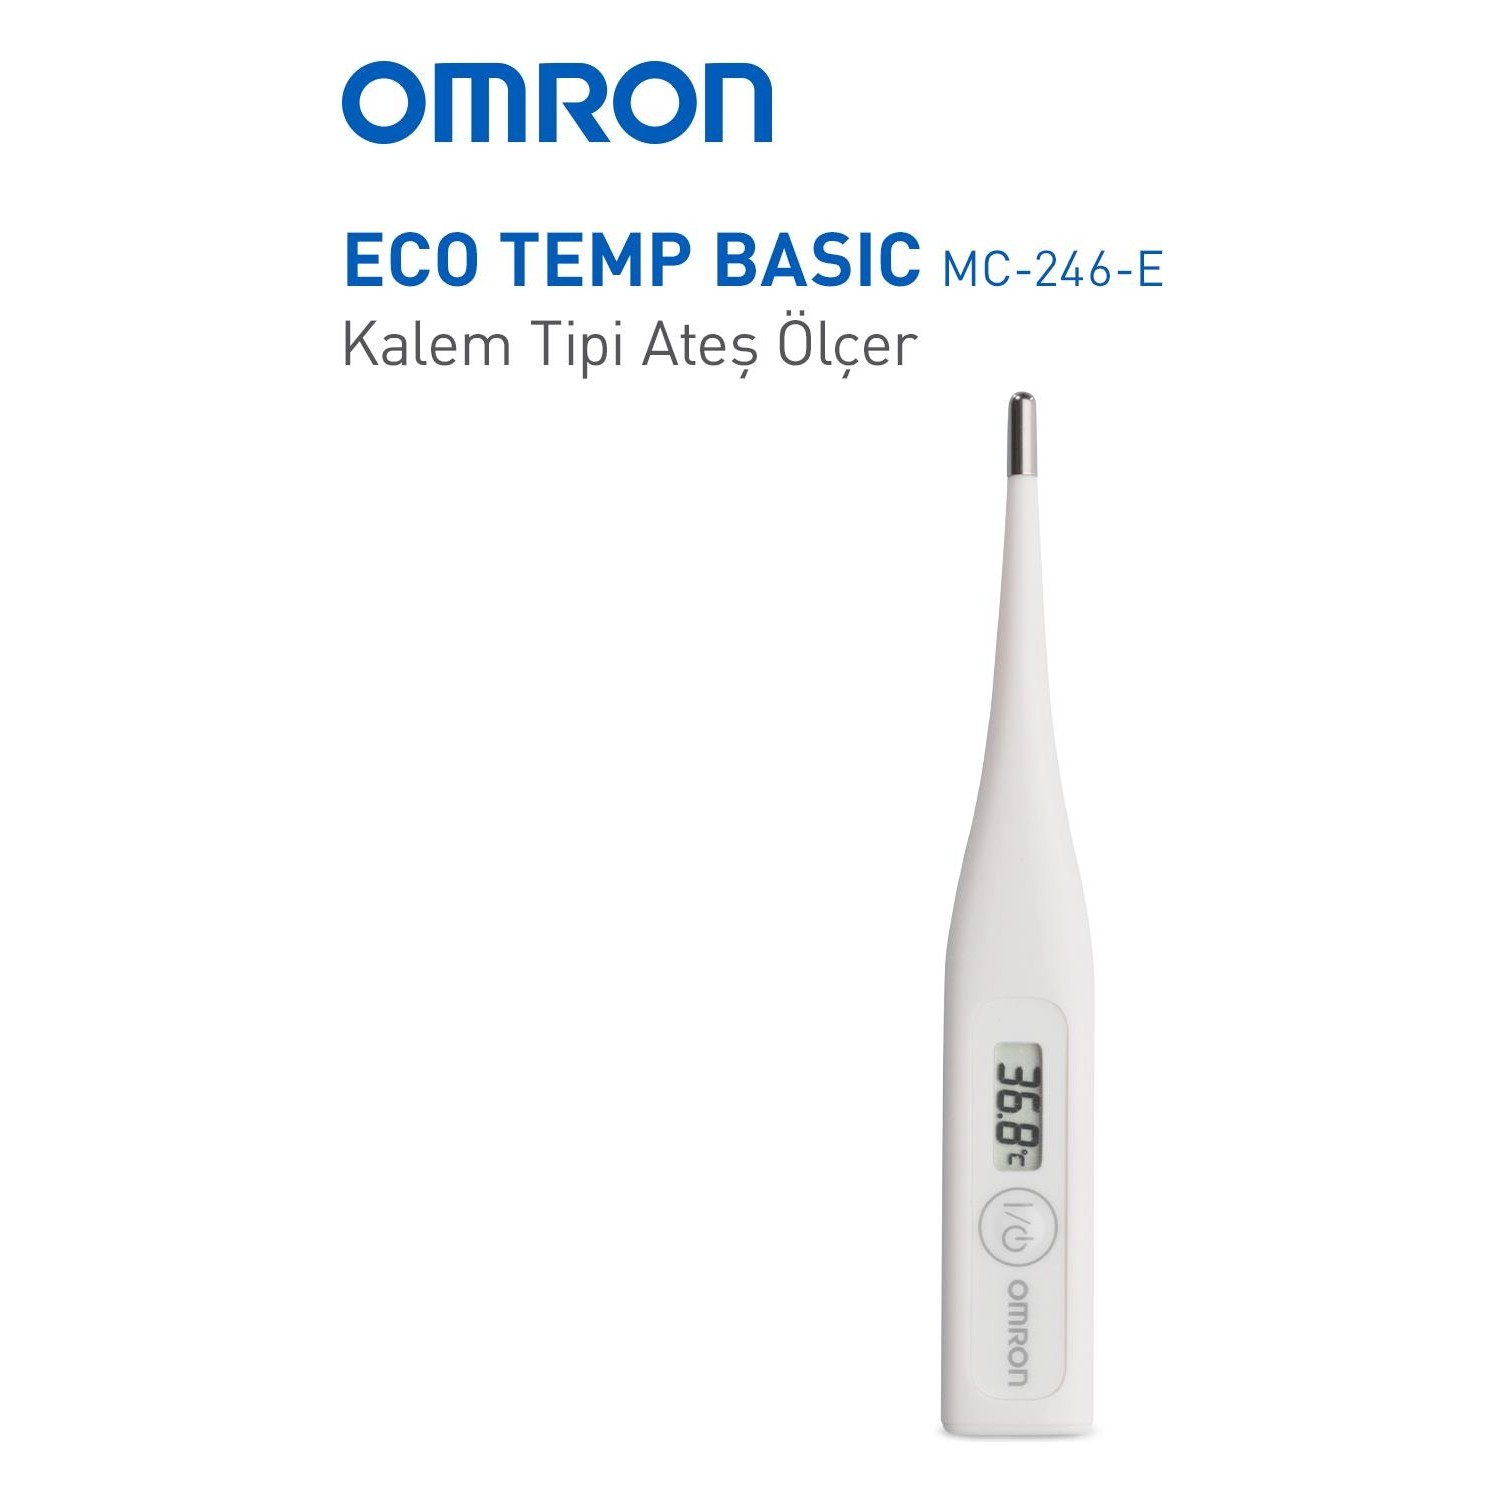 Omron temp basic. Медицинский цифровой термометр Omron MC-246 схема. Медицинский цифровой термометр Omron MC-246 схема электрическая.